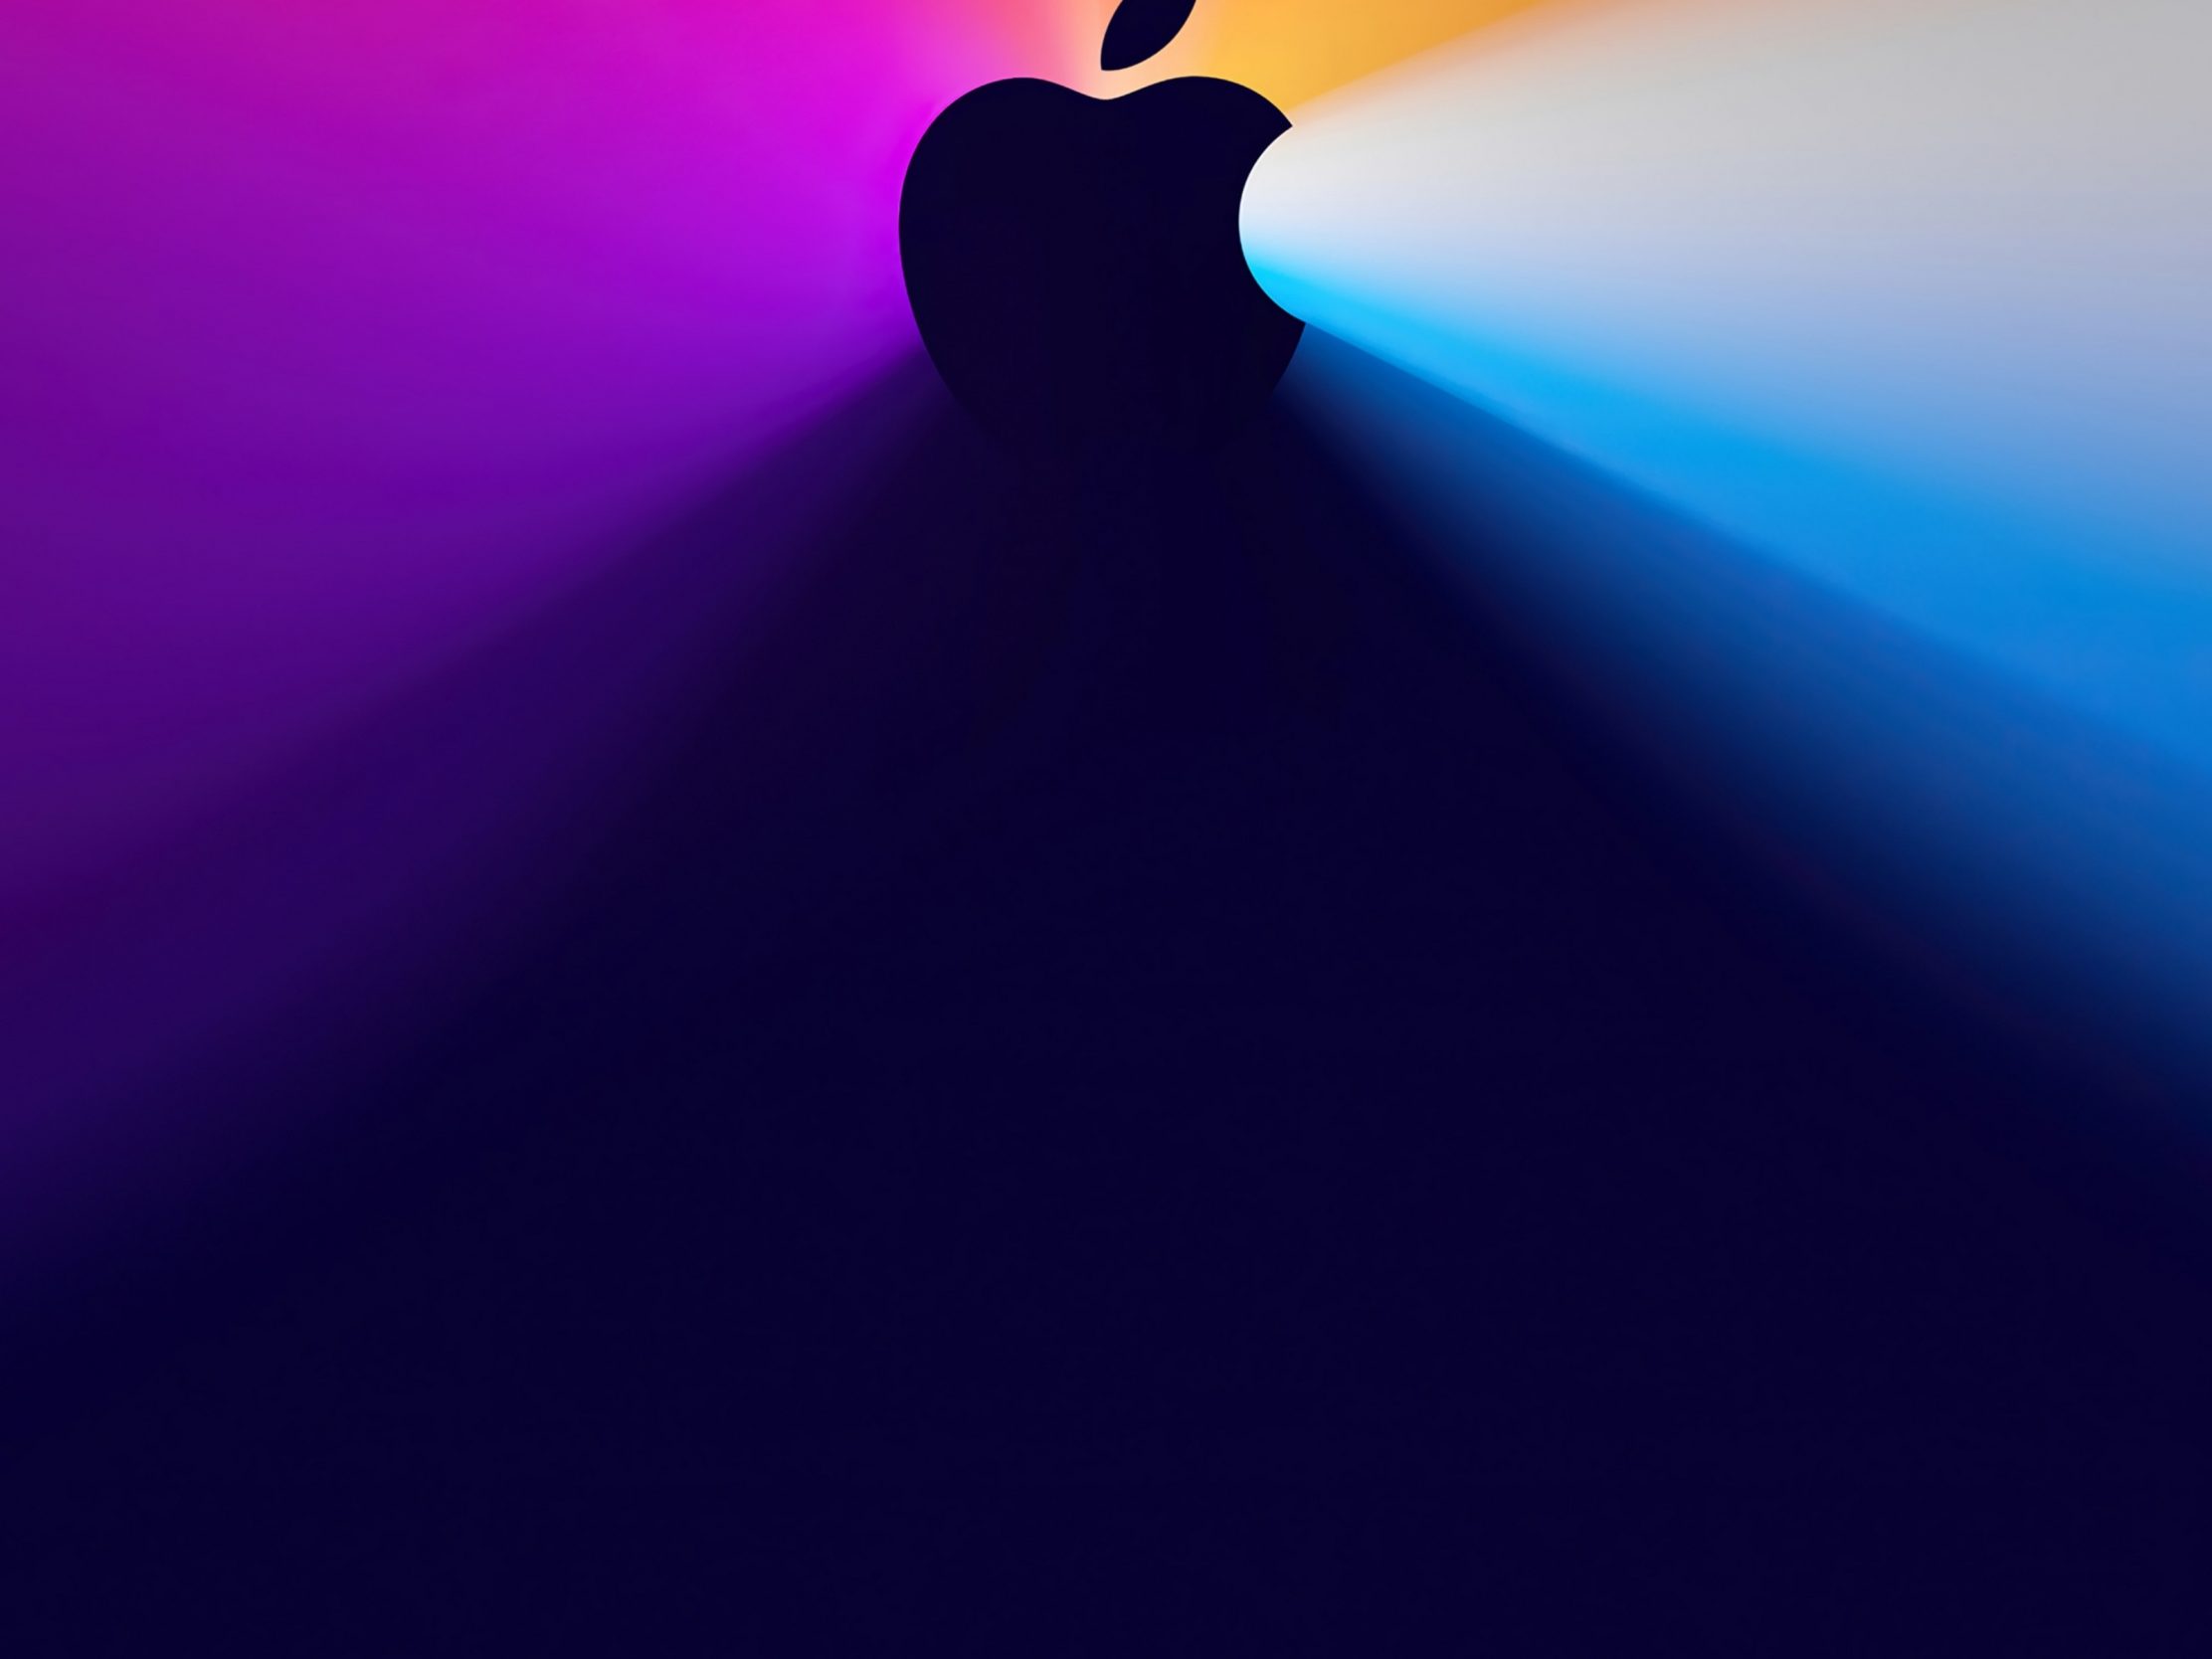 2224x1668 iPad Pro wallpapers Colourful iPhone 12 Apple Logo iPad Wallpaper 2224x1668 pixels resolution